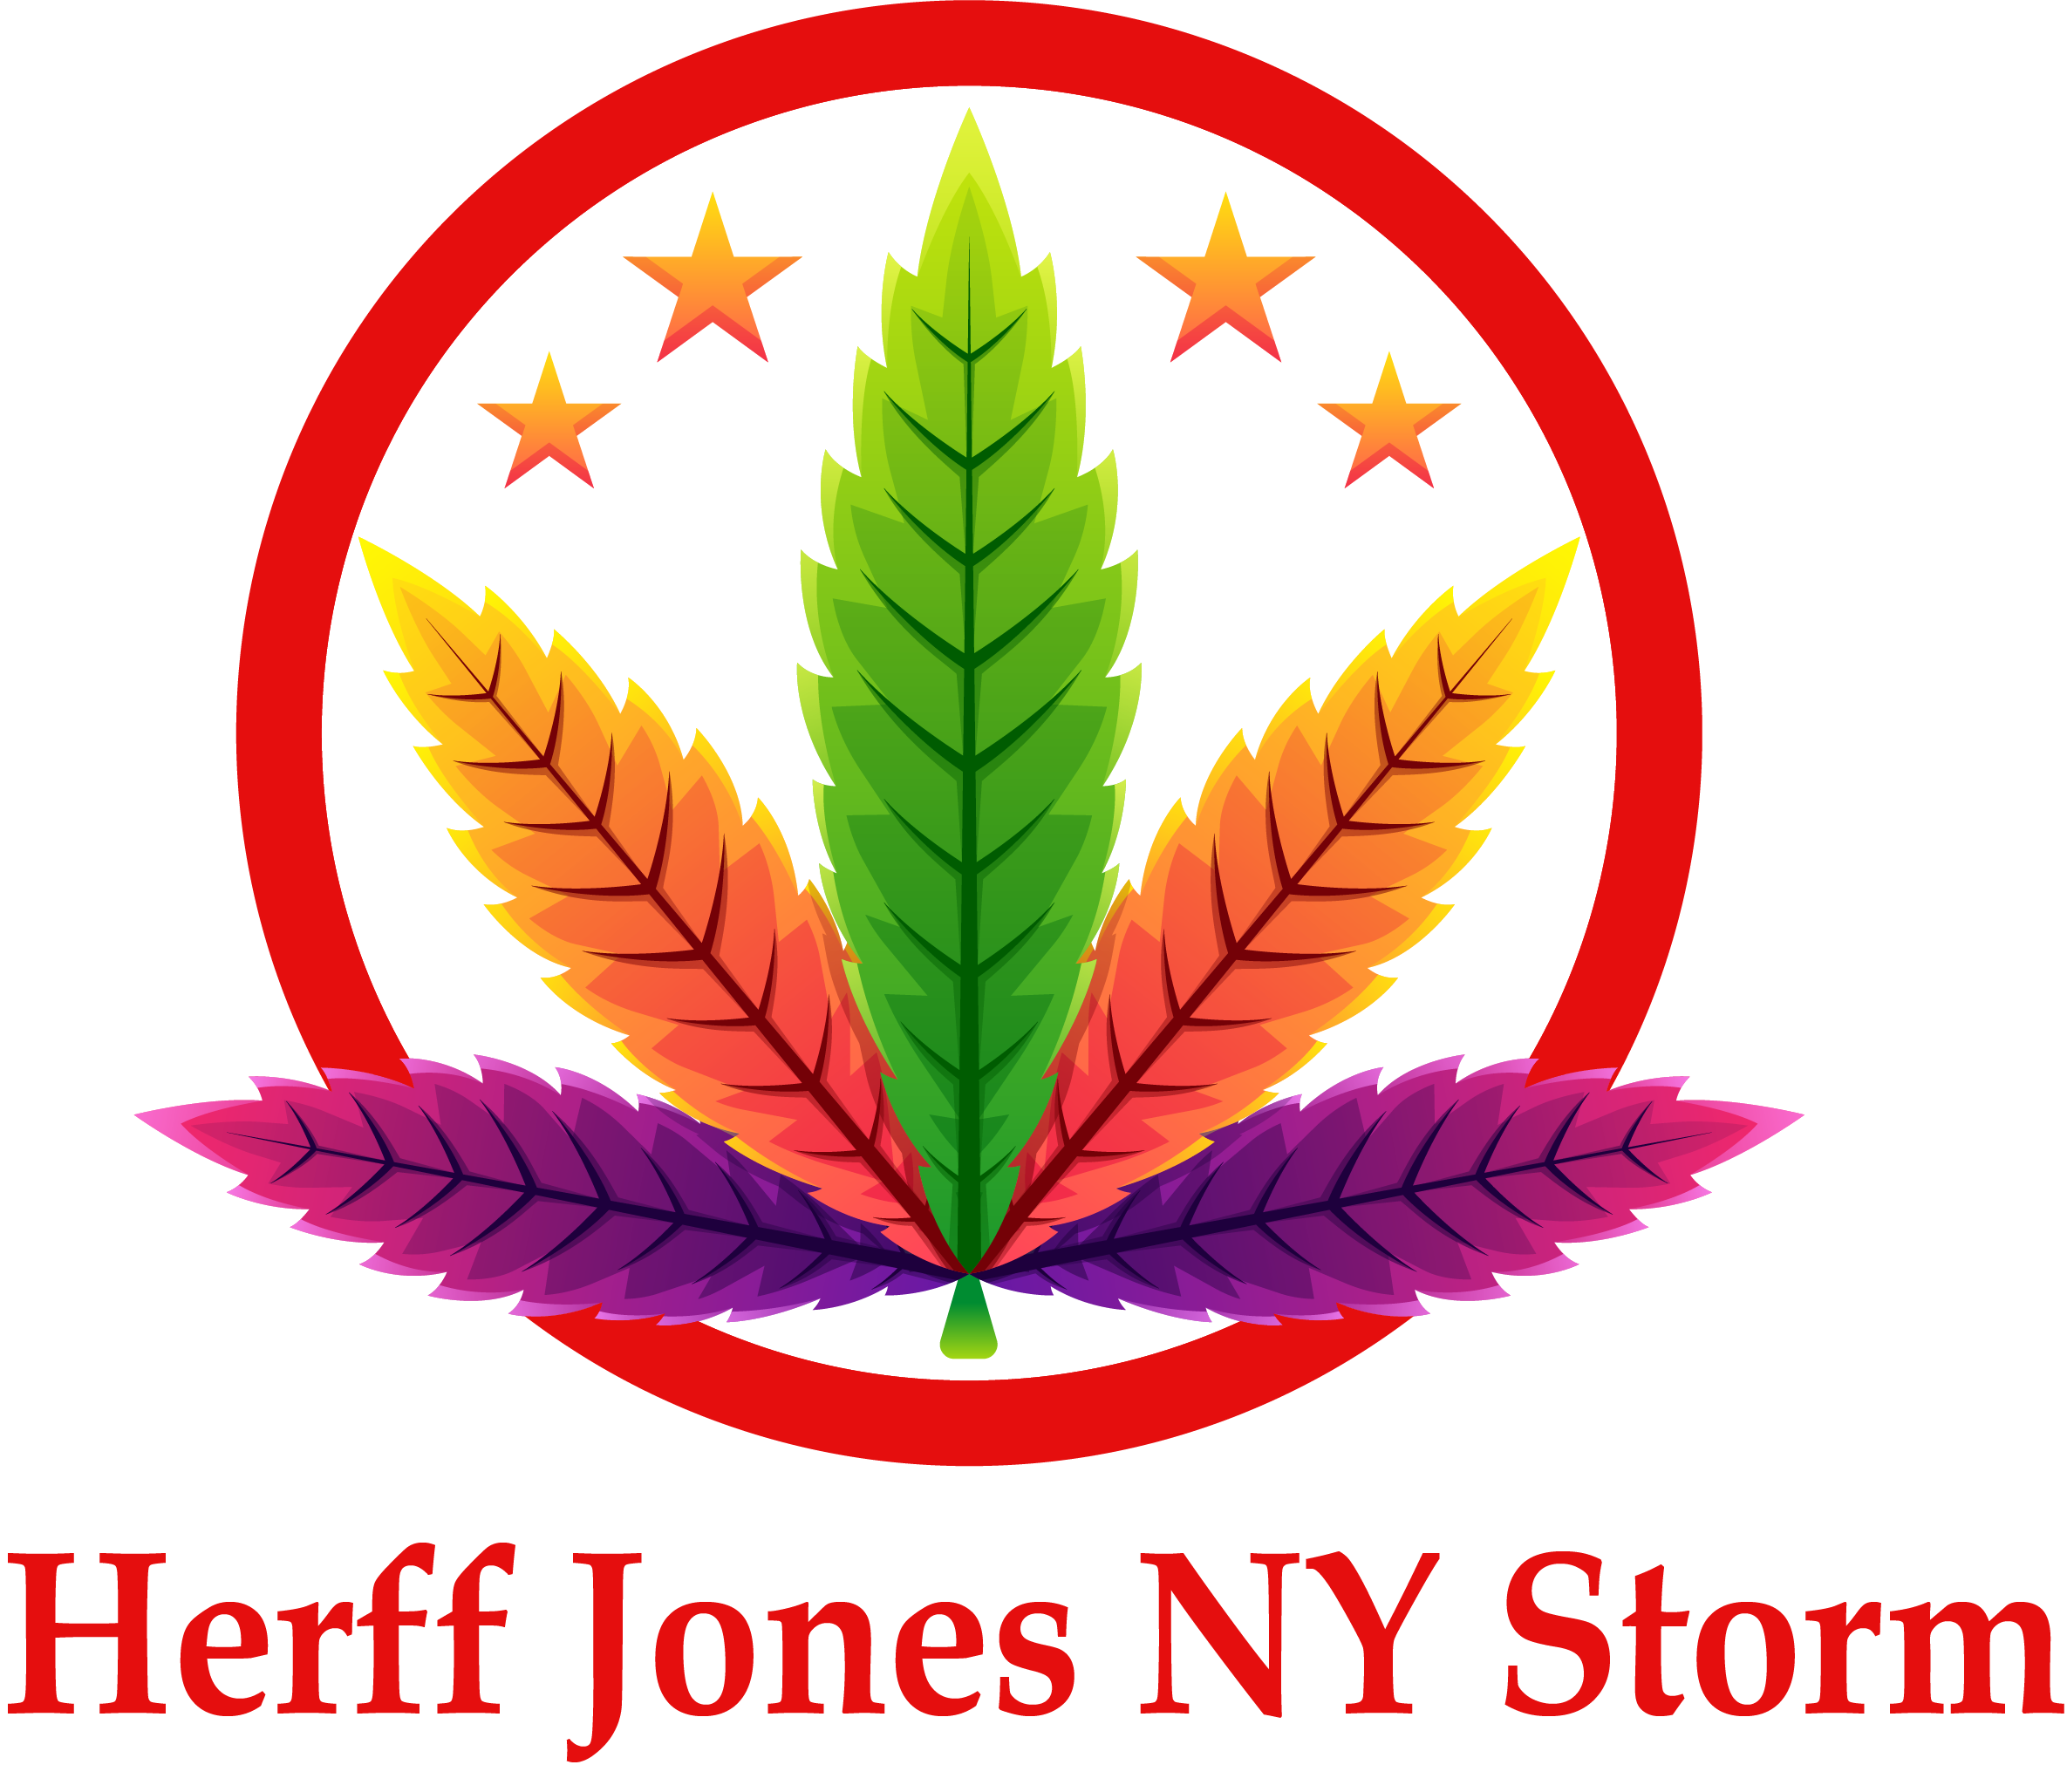 Herff Jones NY Storm